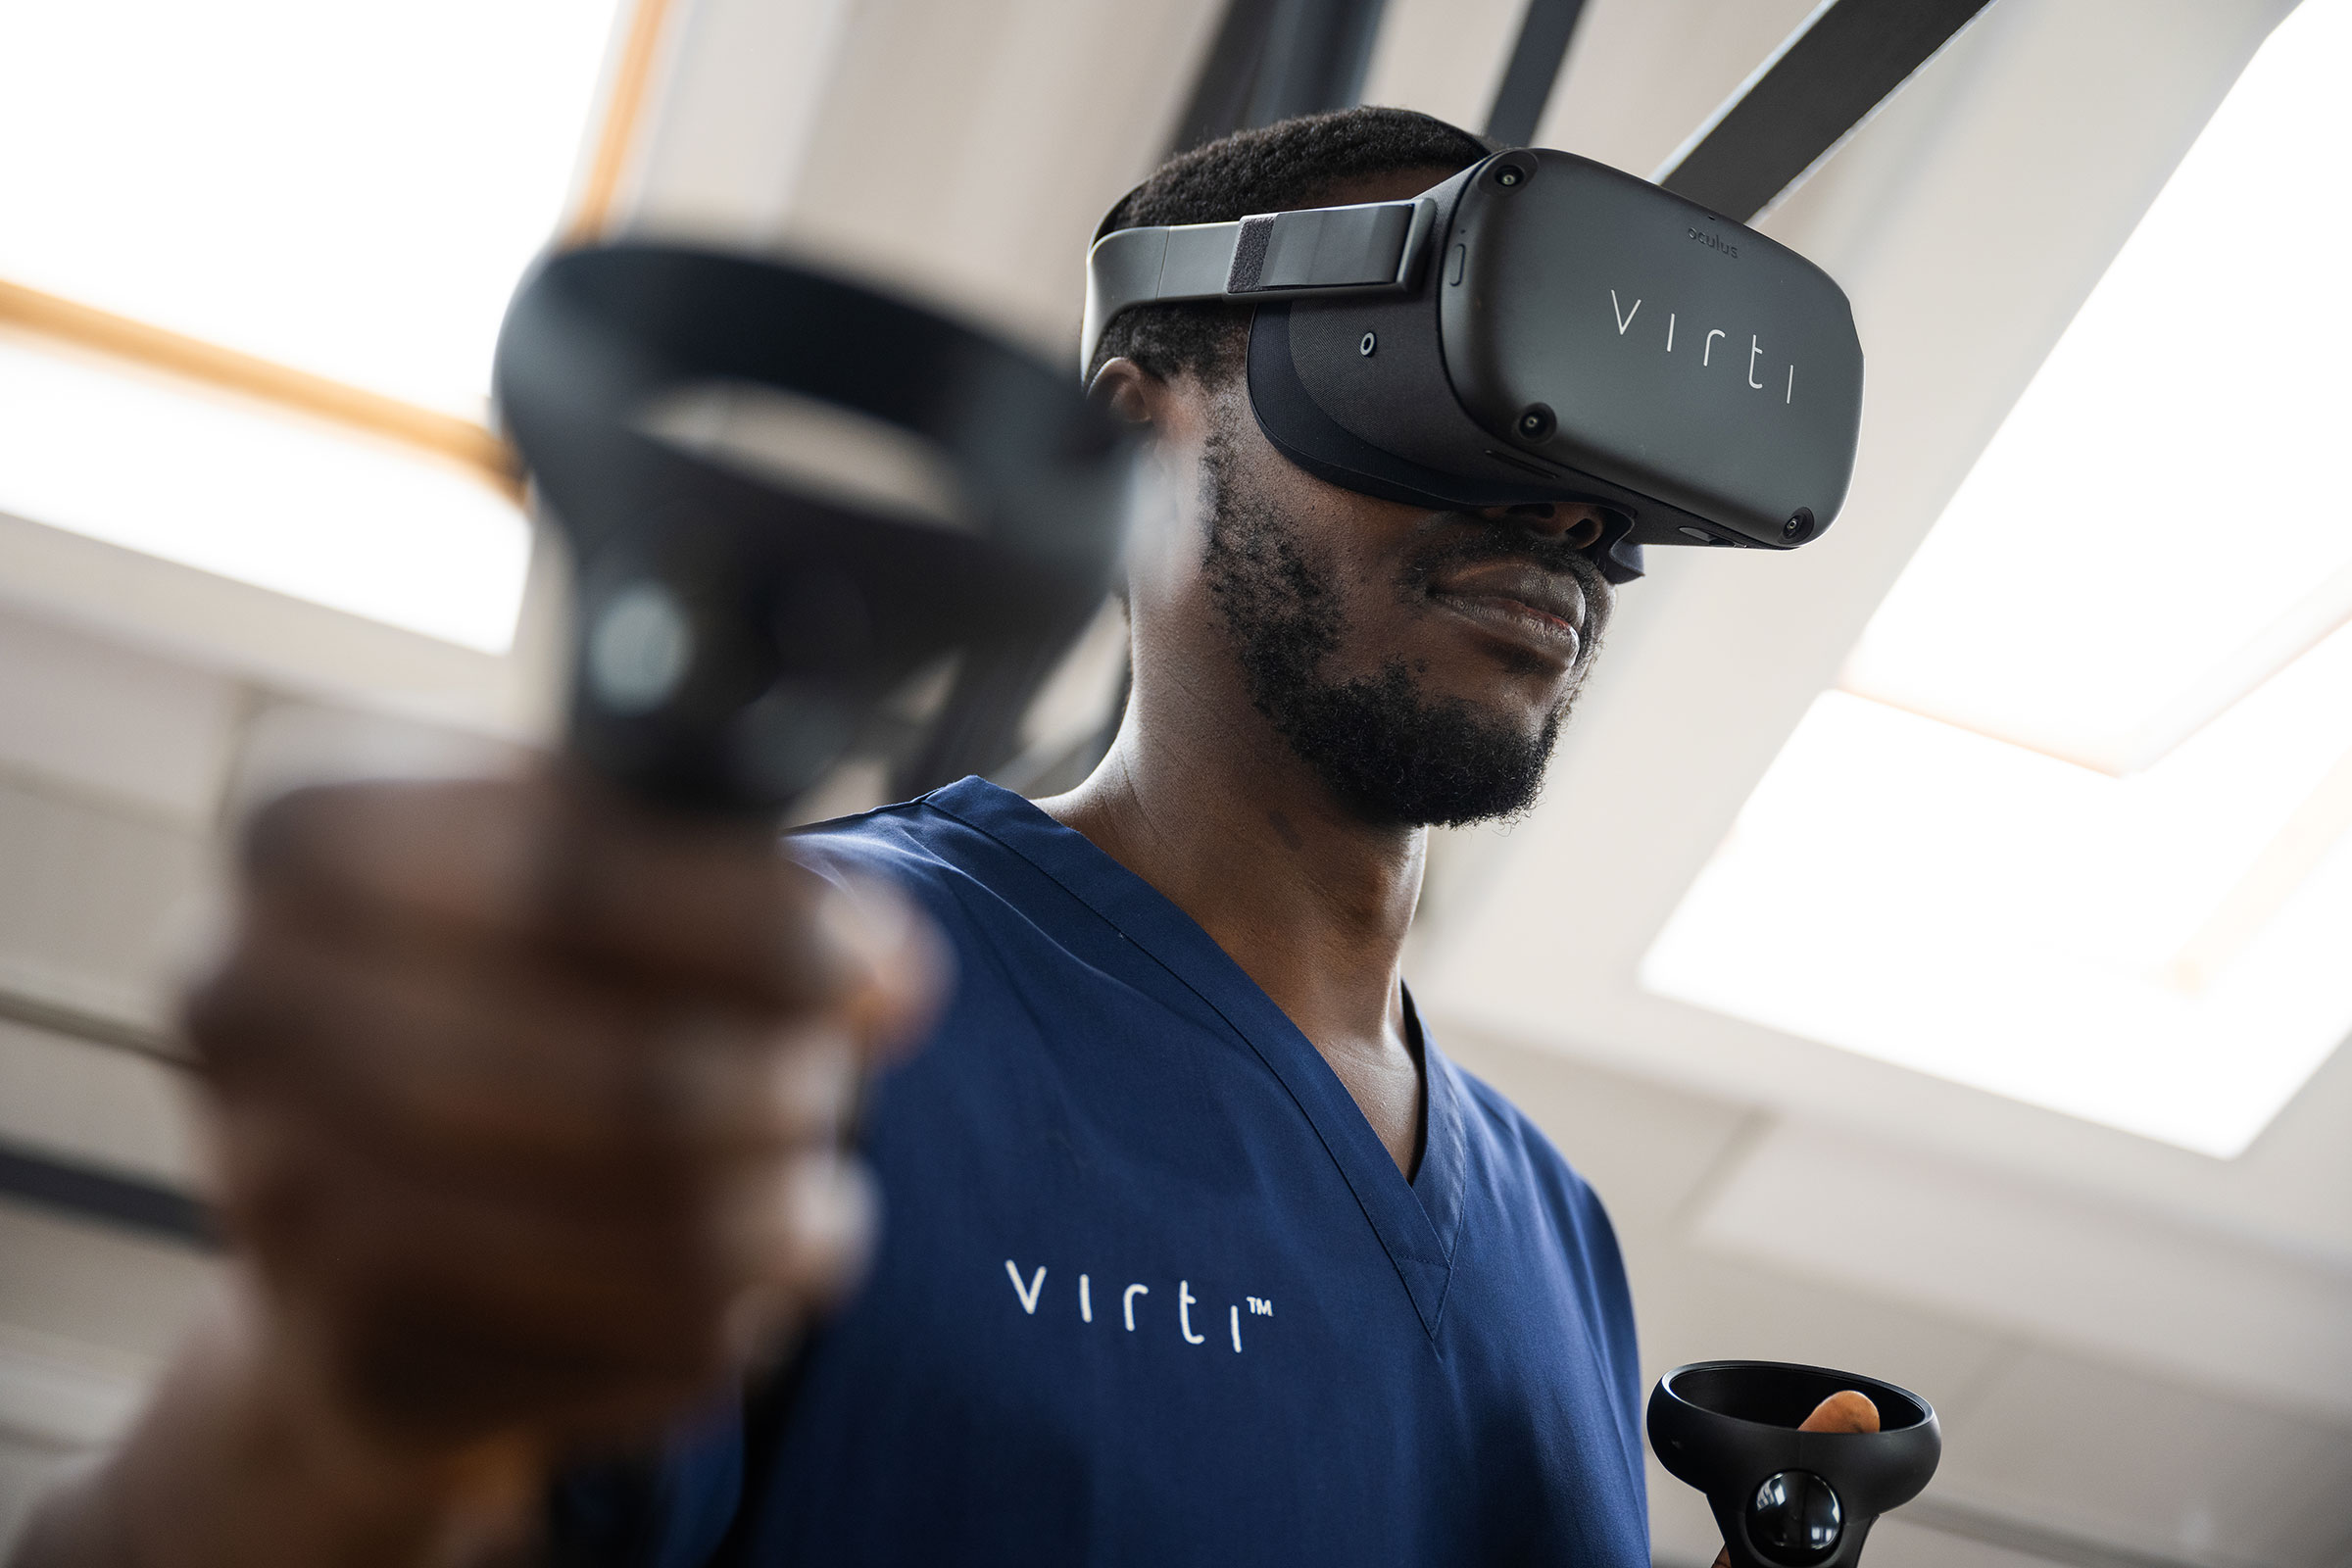 Best Inventions 2020: Virti